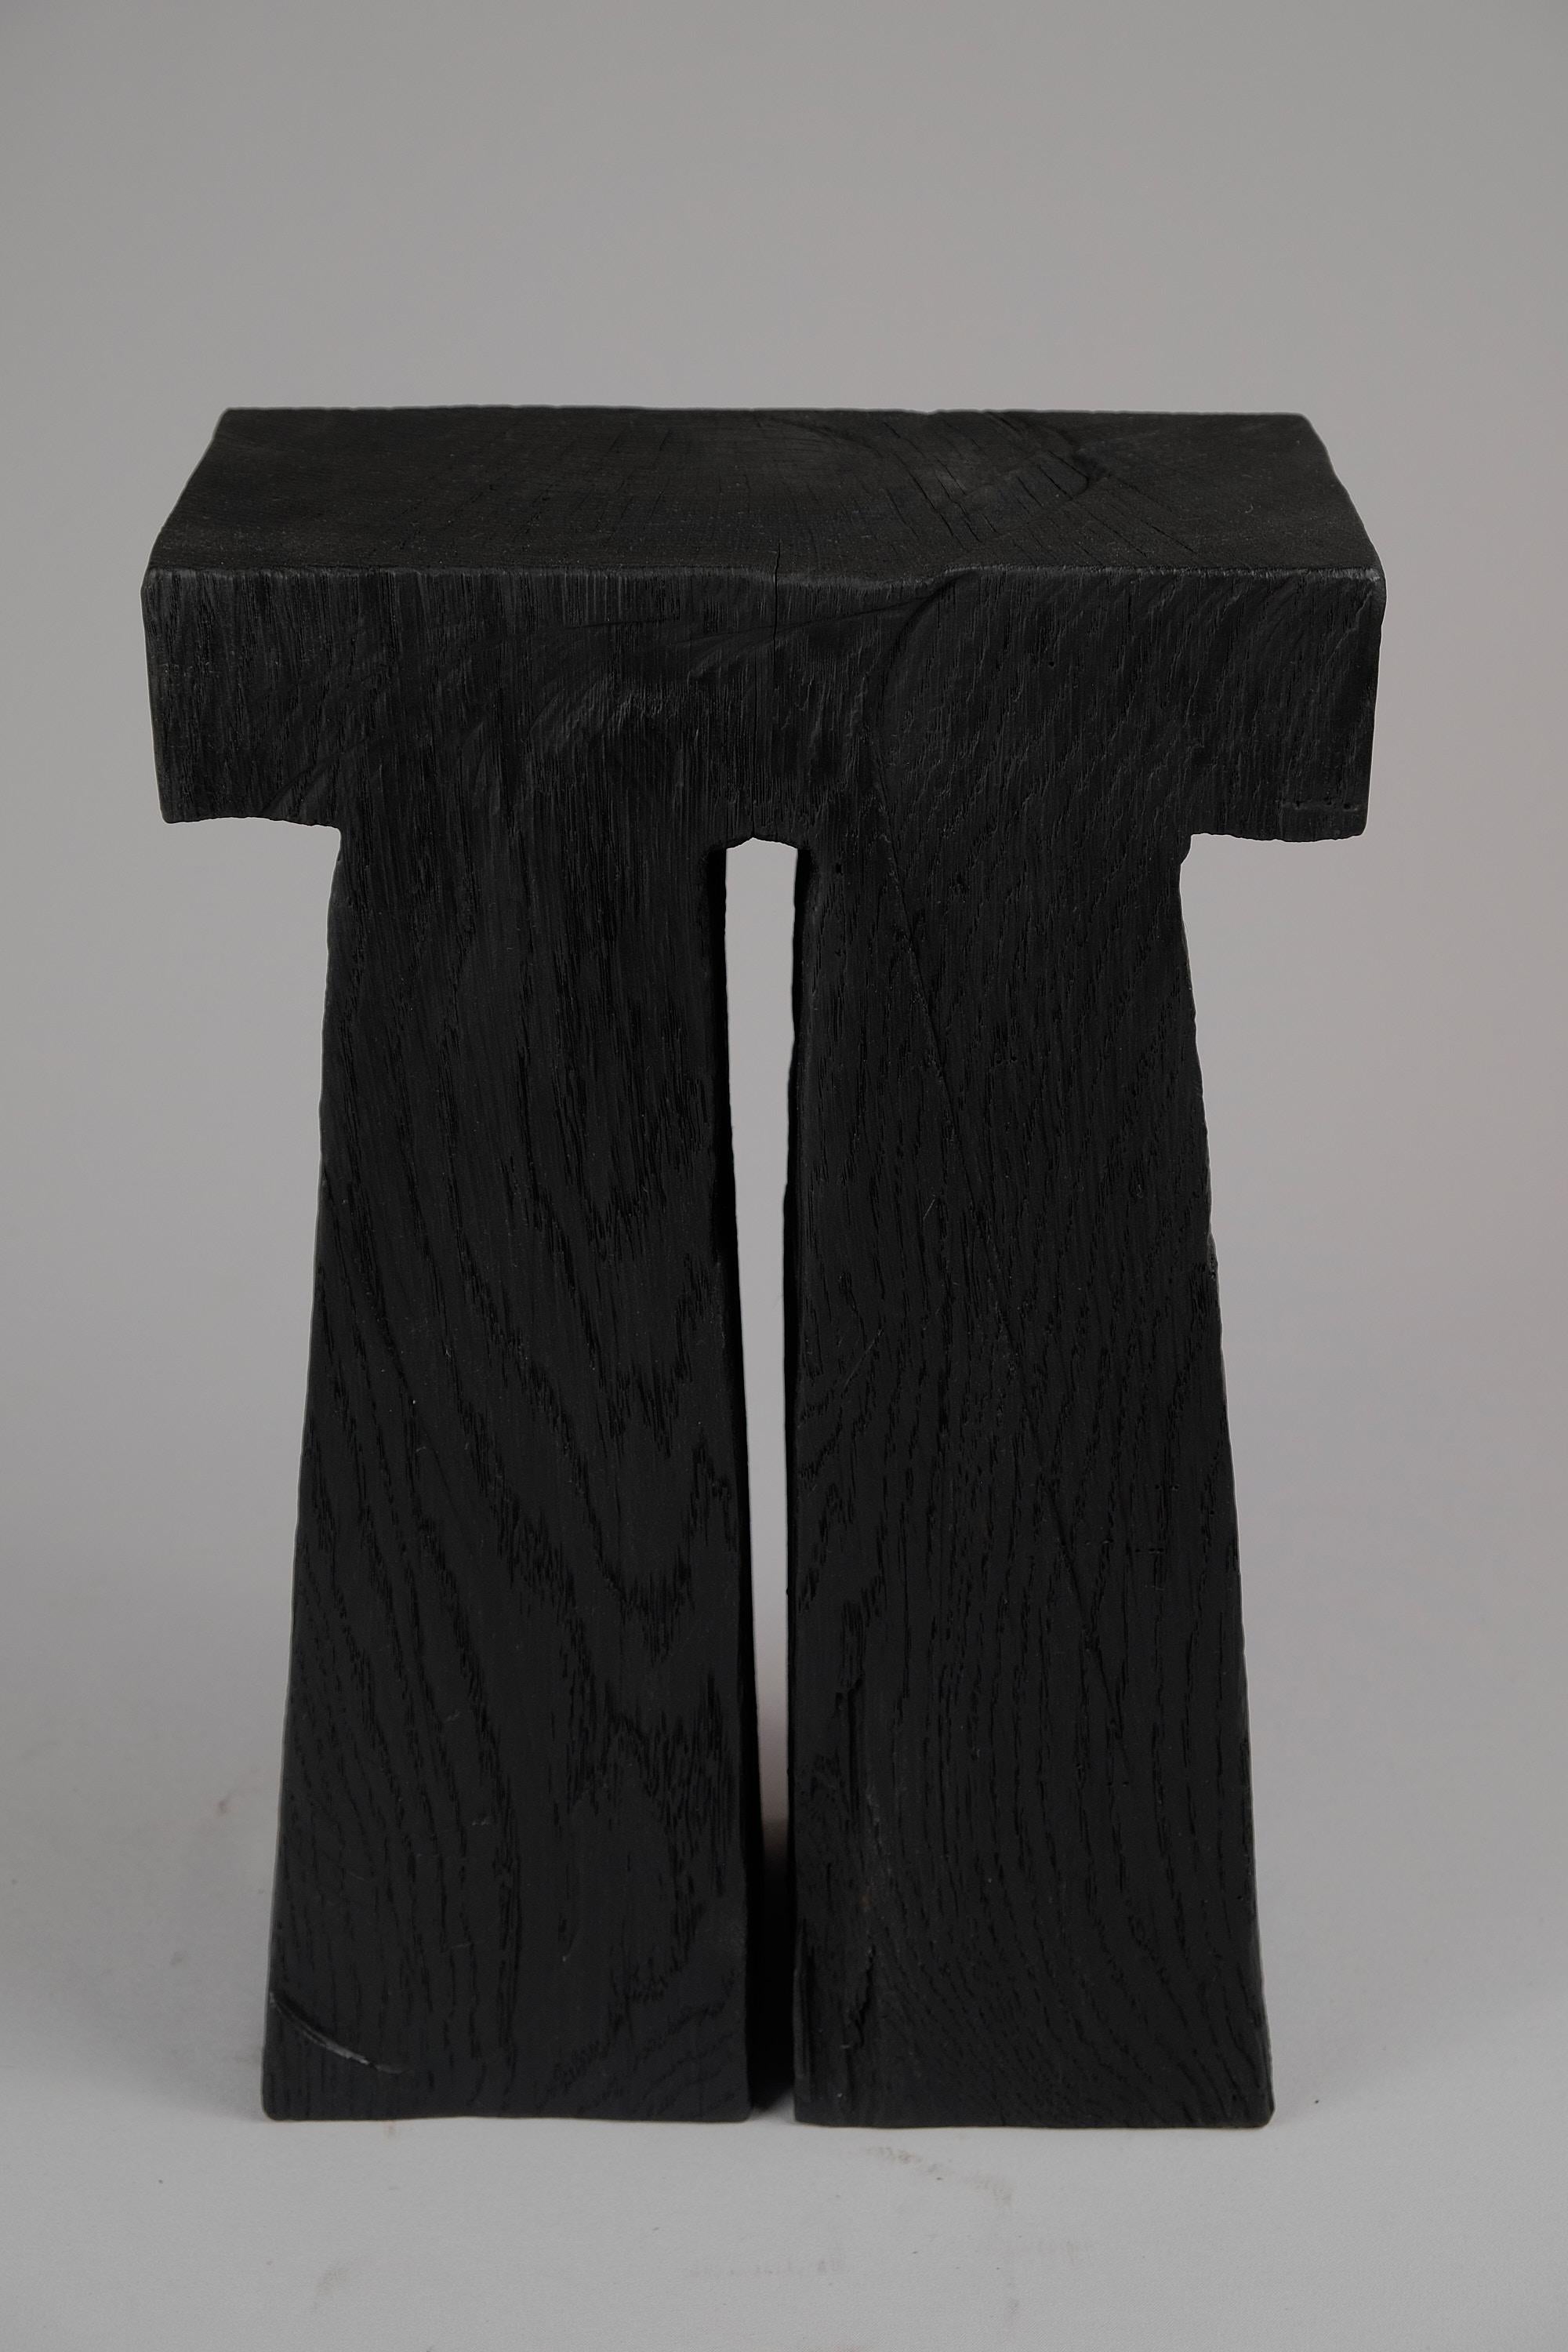 Carved Solid Burnt Wood, Side Table, Stool, Original Contemporary Design, Logniture For Sale